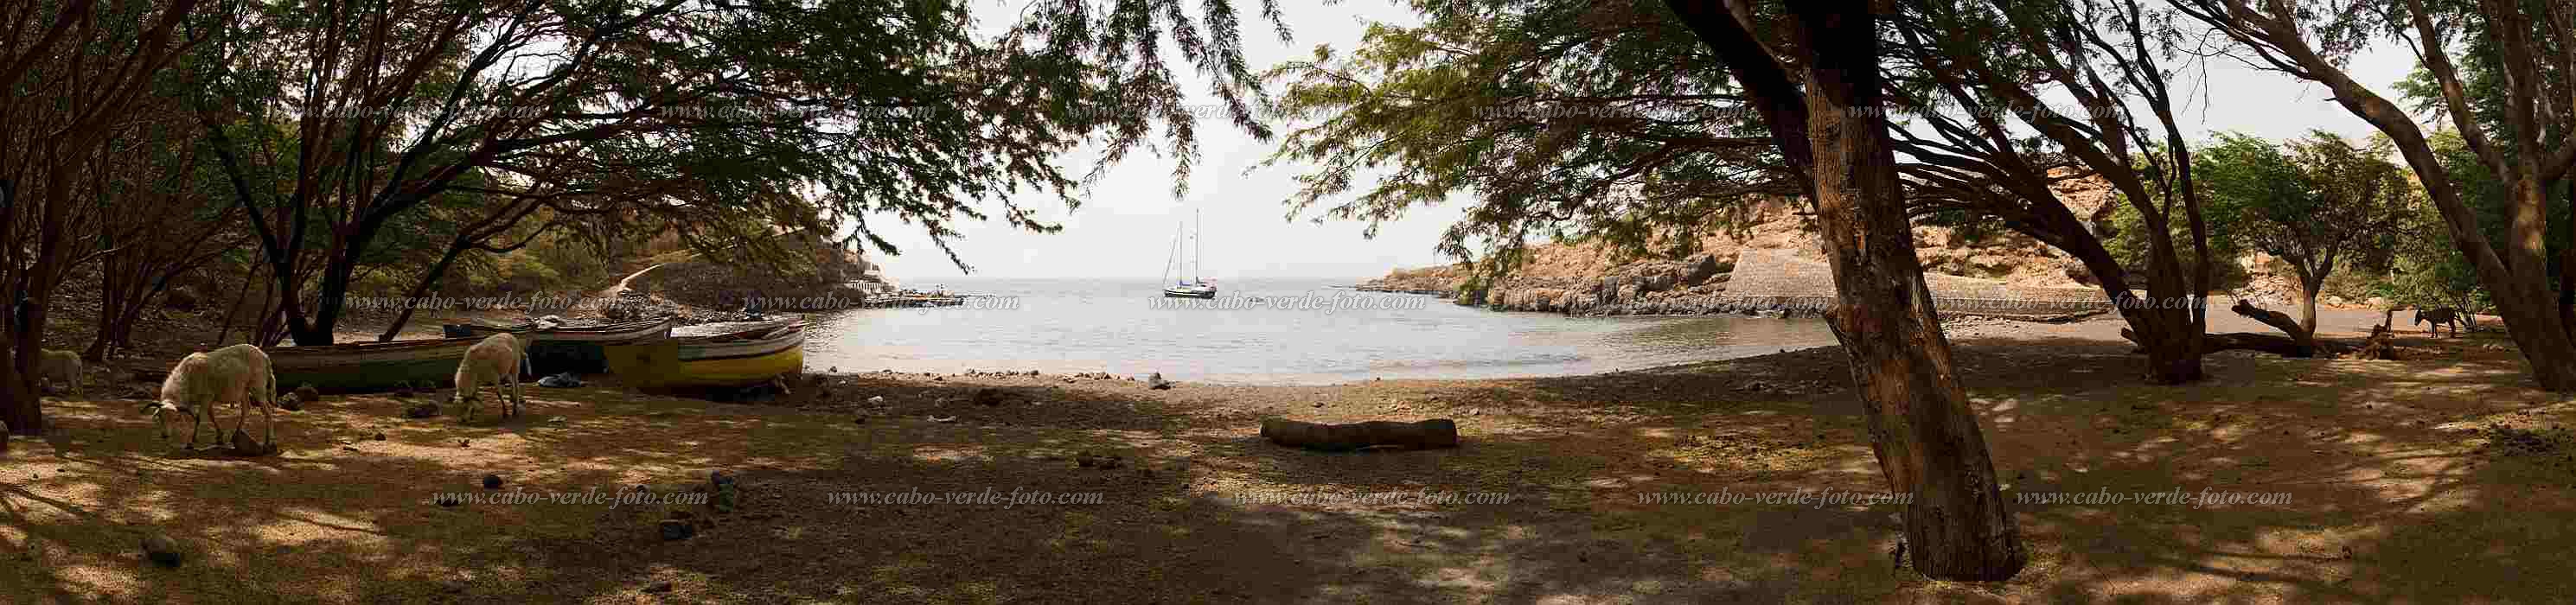 So Nicolau : Carrical : beach : Landscape SeaCabo Verde Foto Gallery